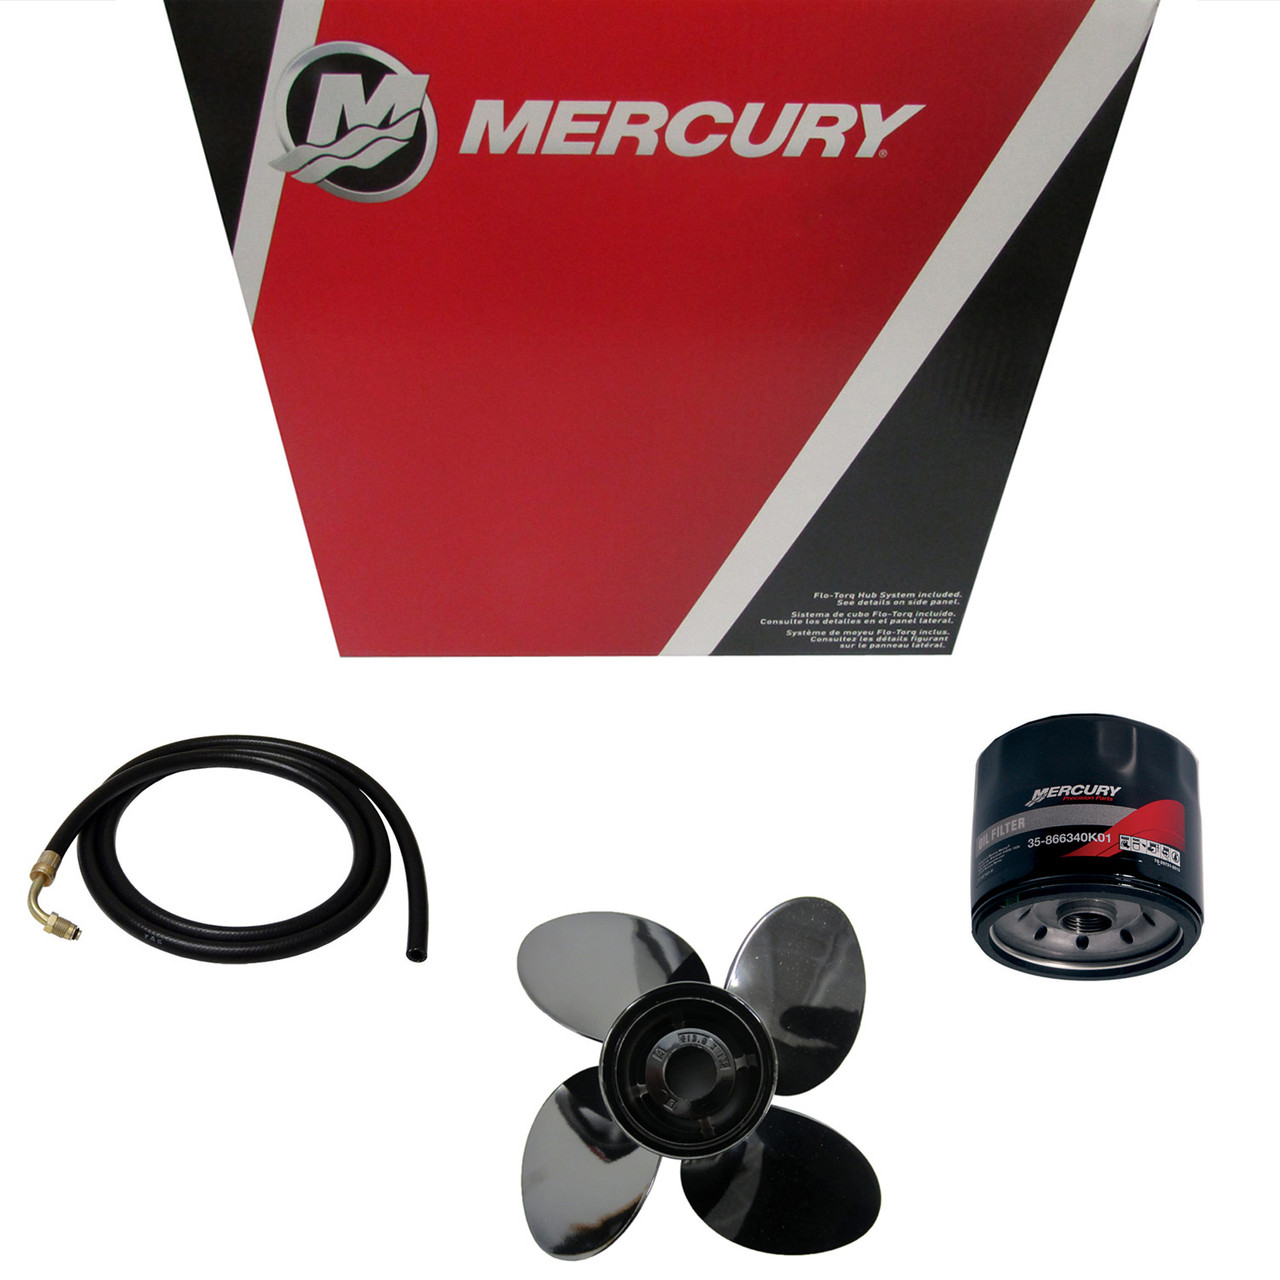 Mercury Marine / Mercruiser New OEM Com Mod-Dual, 84-893378K04